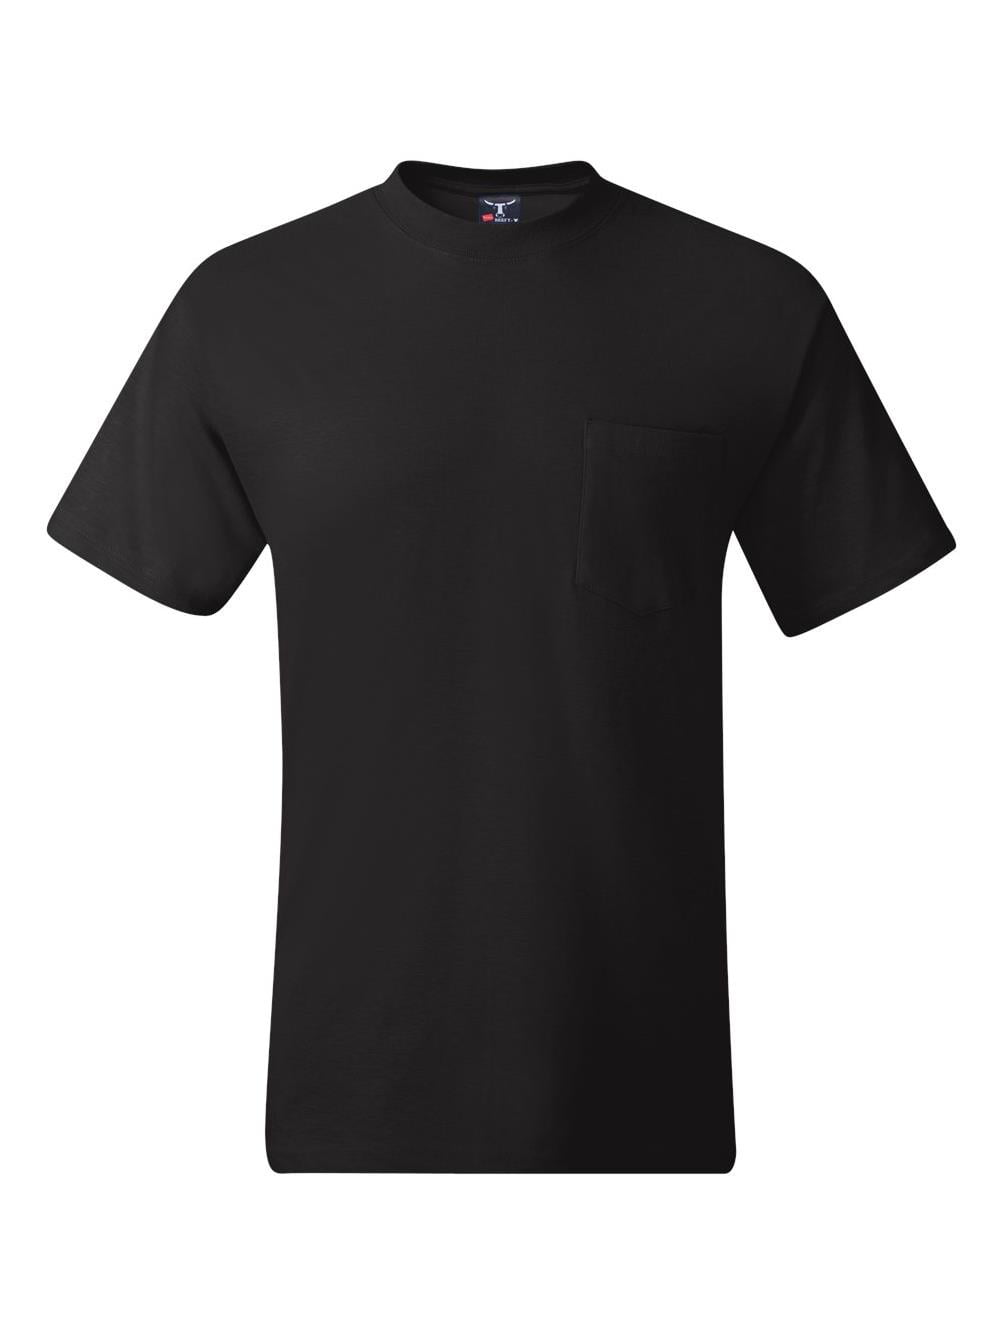 Hanes - Hanes T-Shirts Beefy-T with a Pocket 5190 - Walmart.com